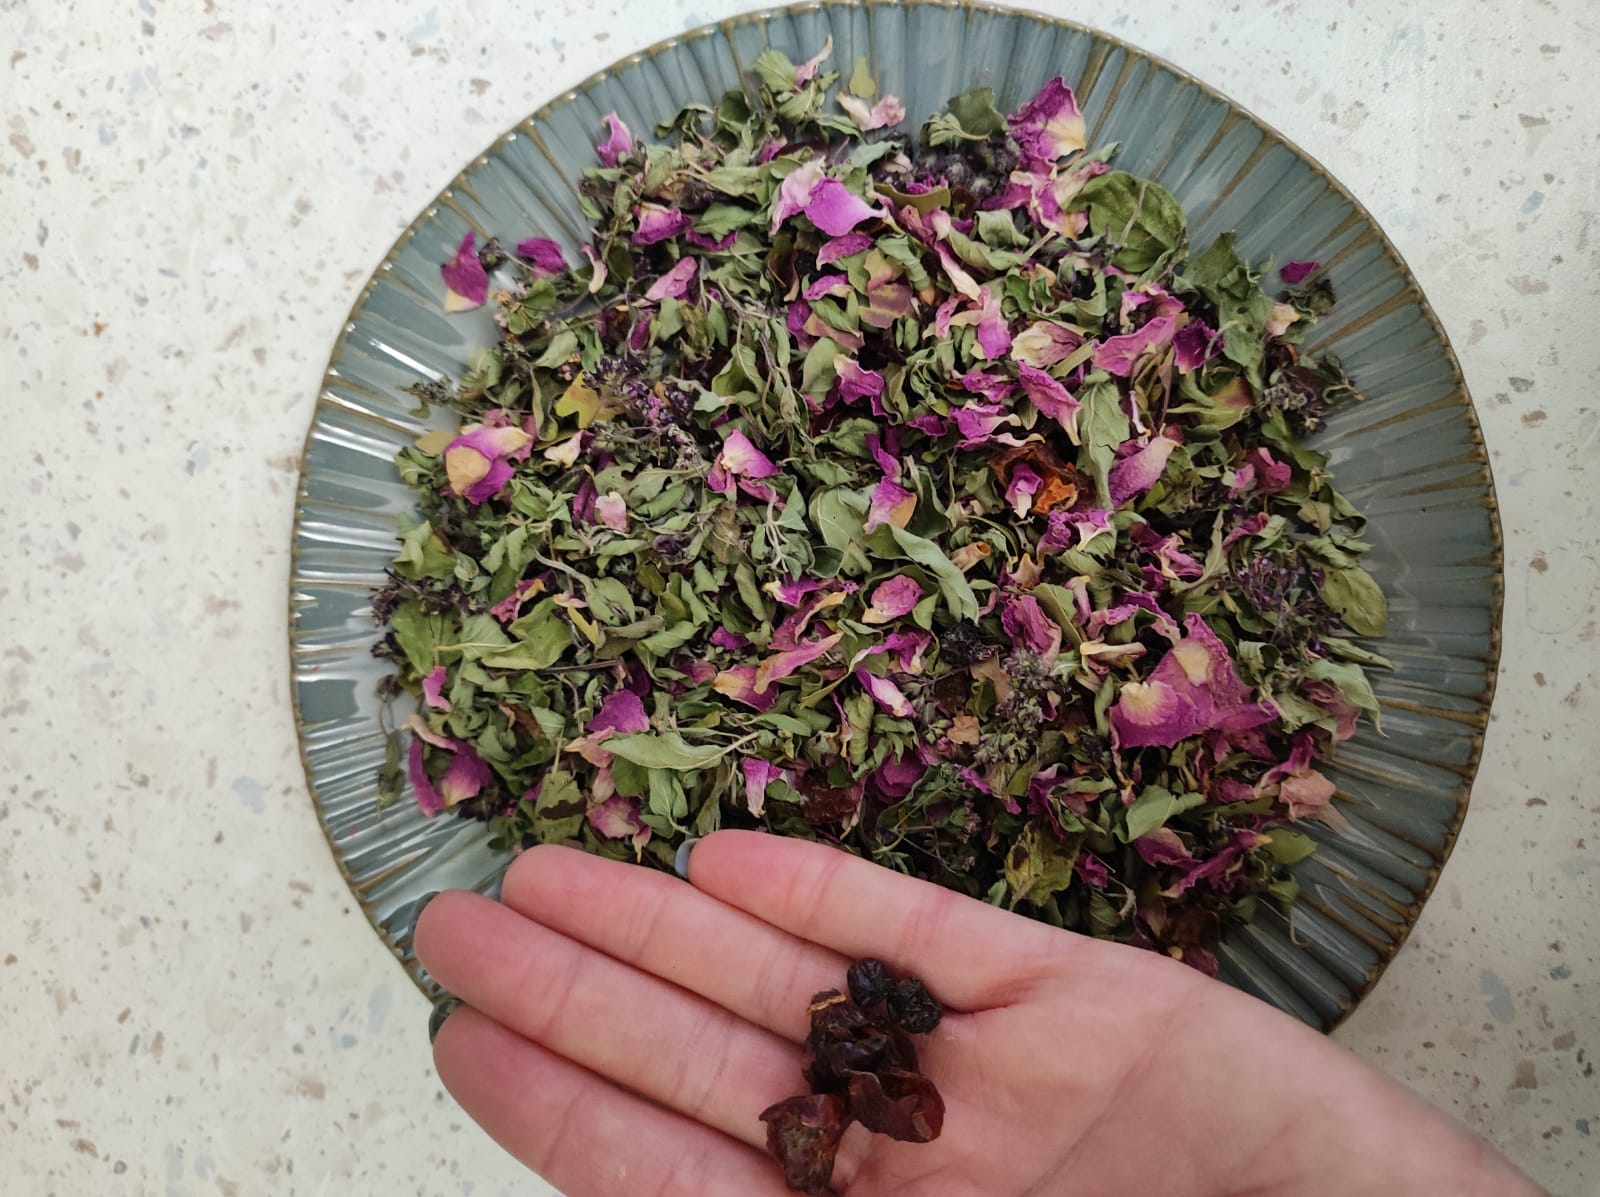 Armenian Organic Herbal Tea Darman - Gift Set - 27 packs 